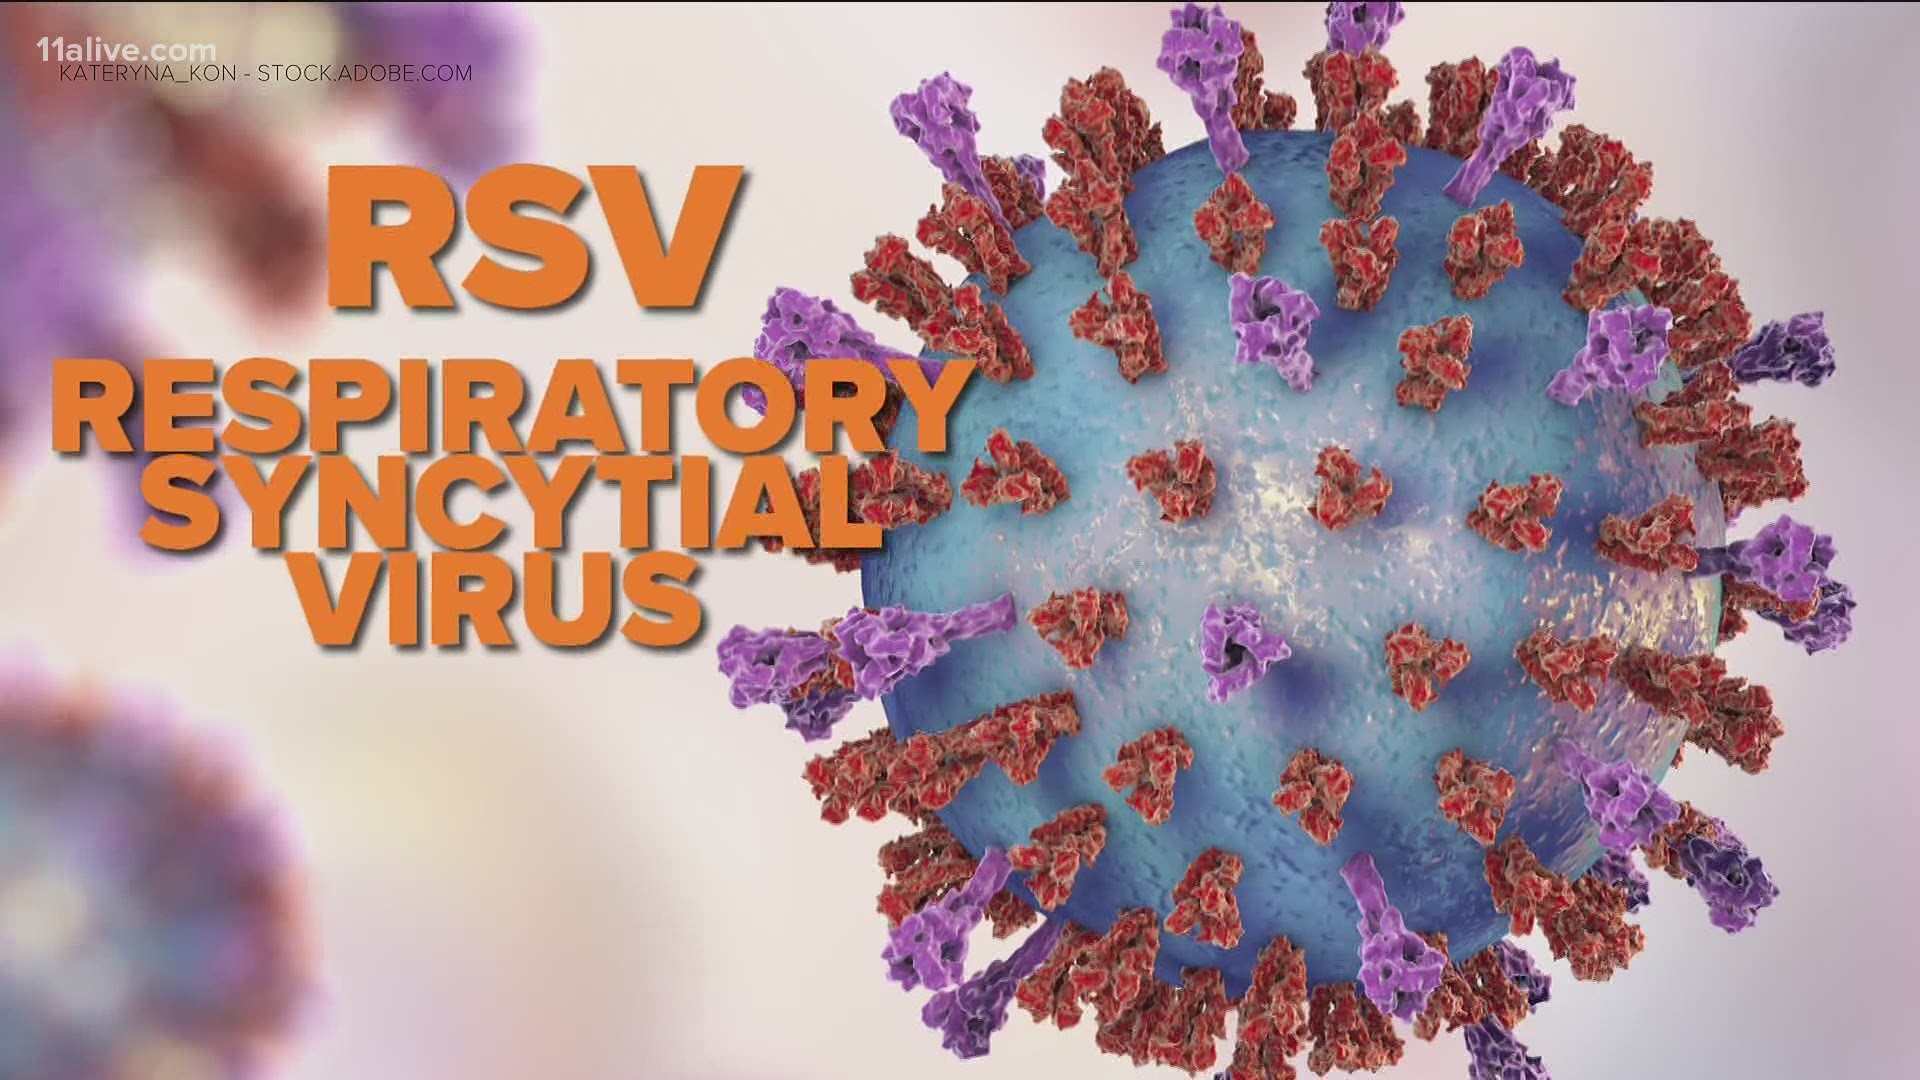 Virus respiratory syncytial Respiratory Syncytial